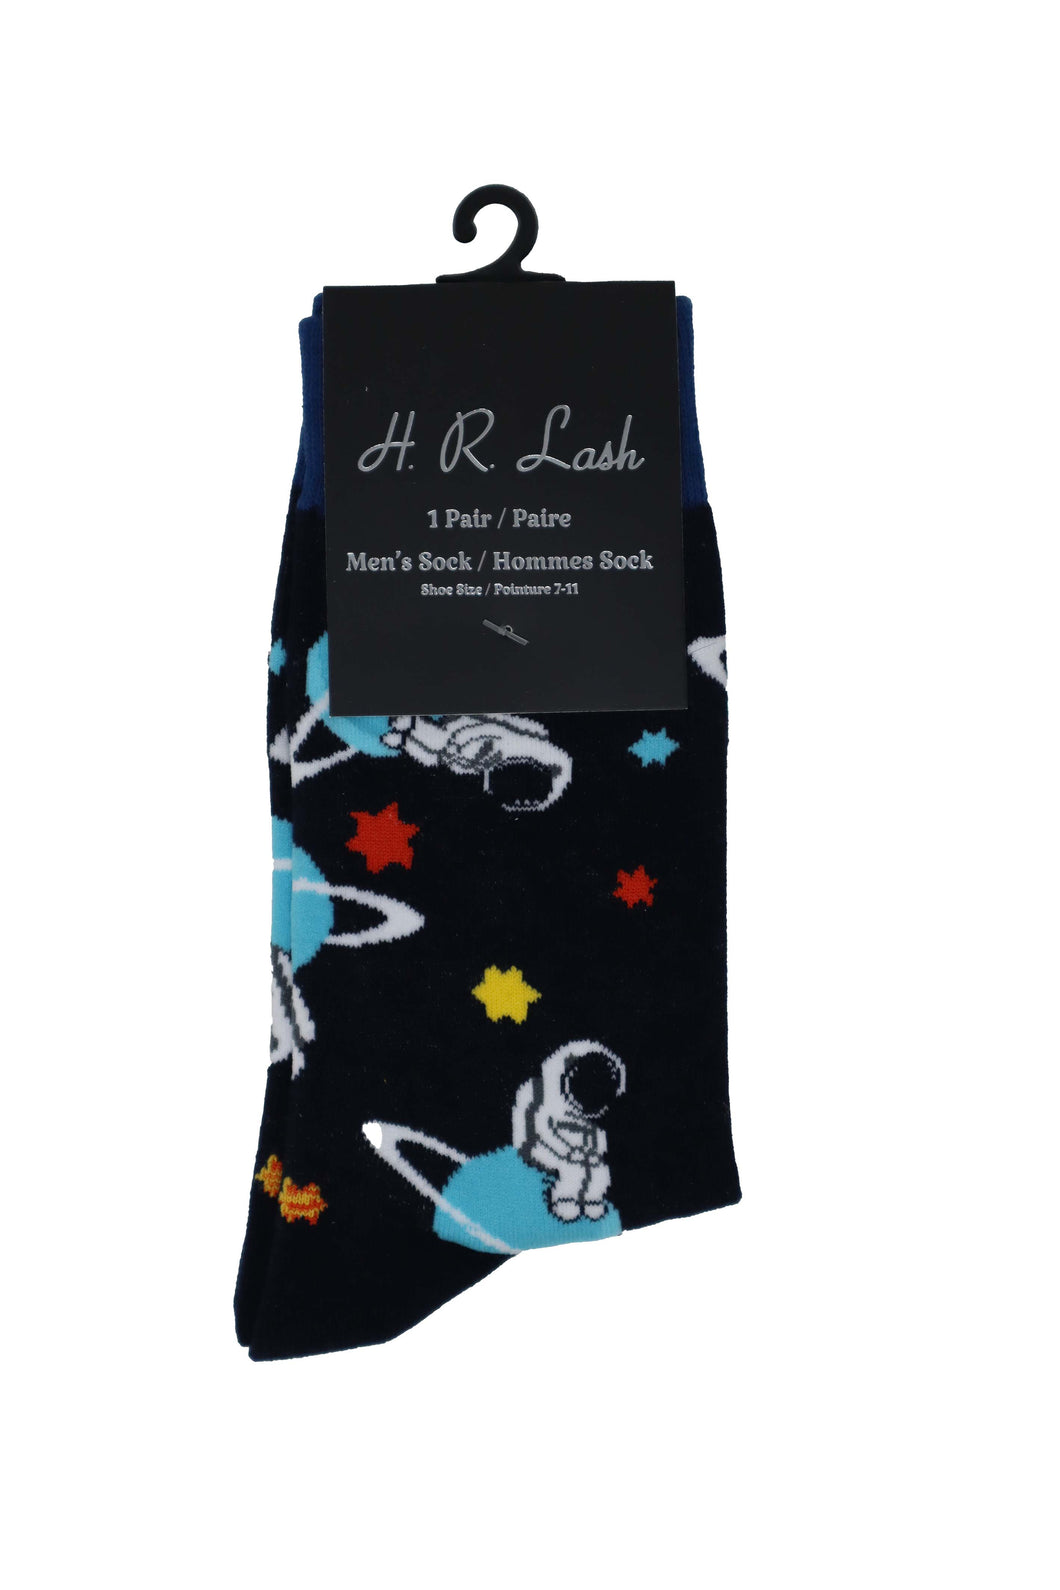 H. R. Lash | FS292 | Fun Socks | Astronaut Sit